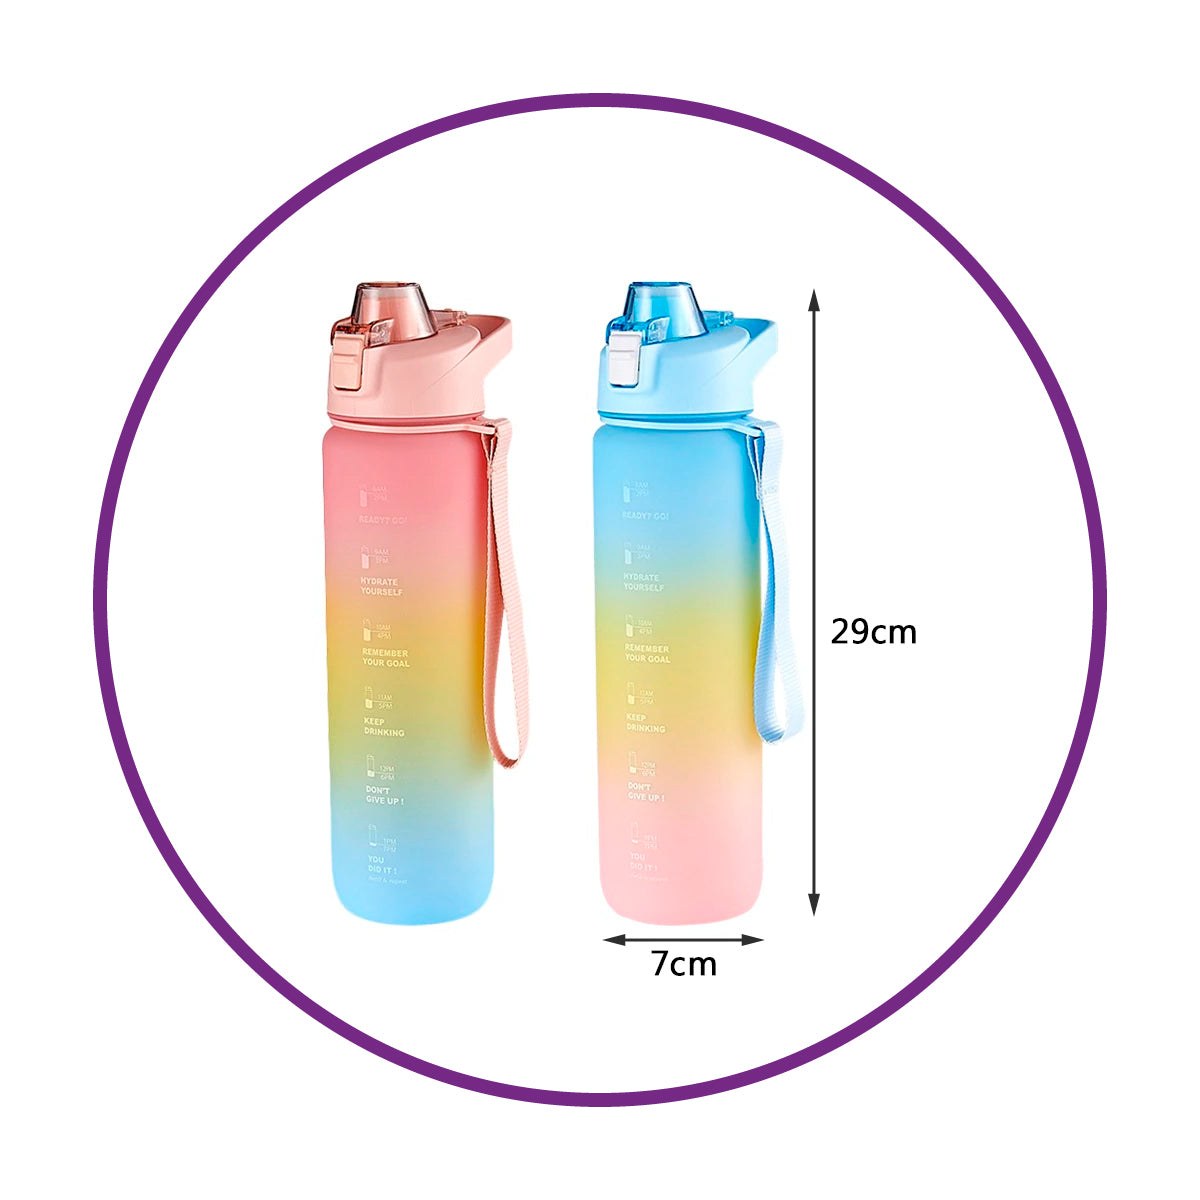 Botella arcoiris frases motivacional kawaii sticker 2D - 3D